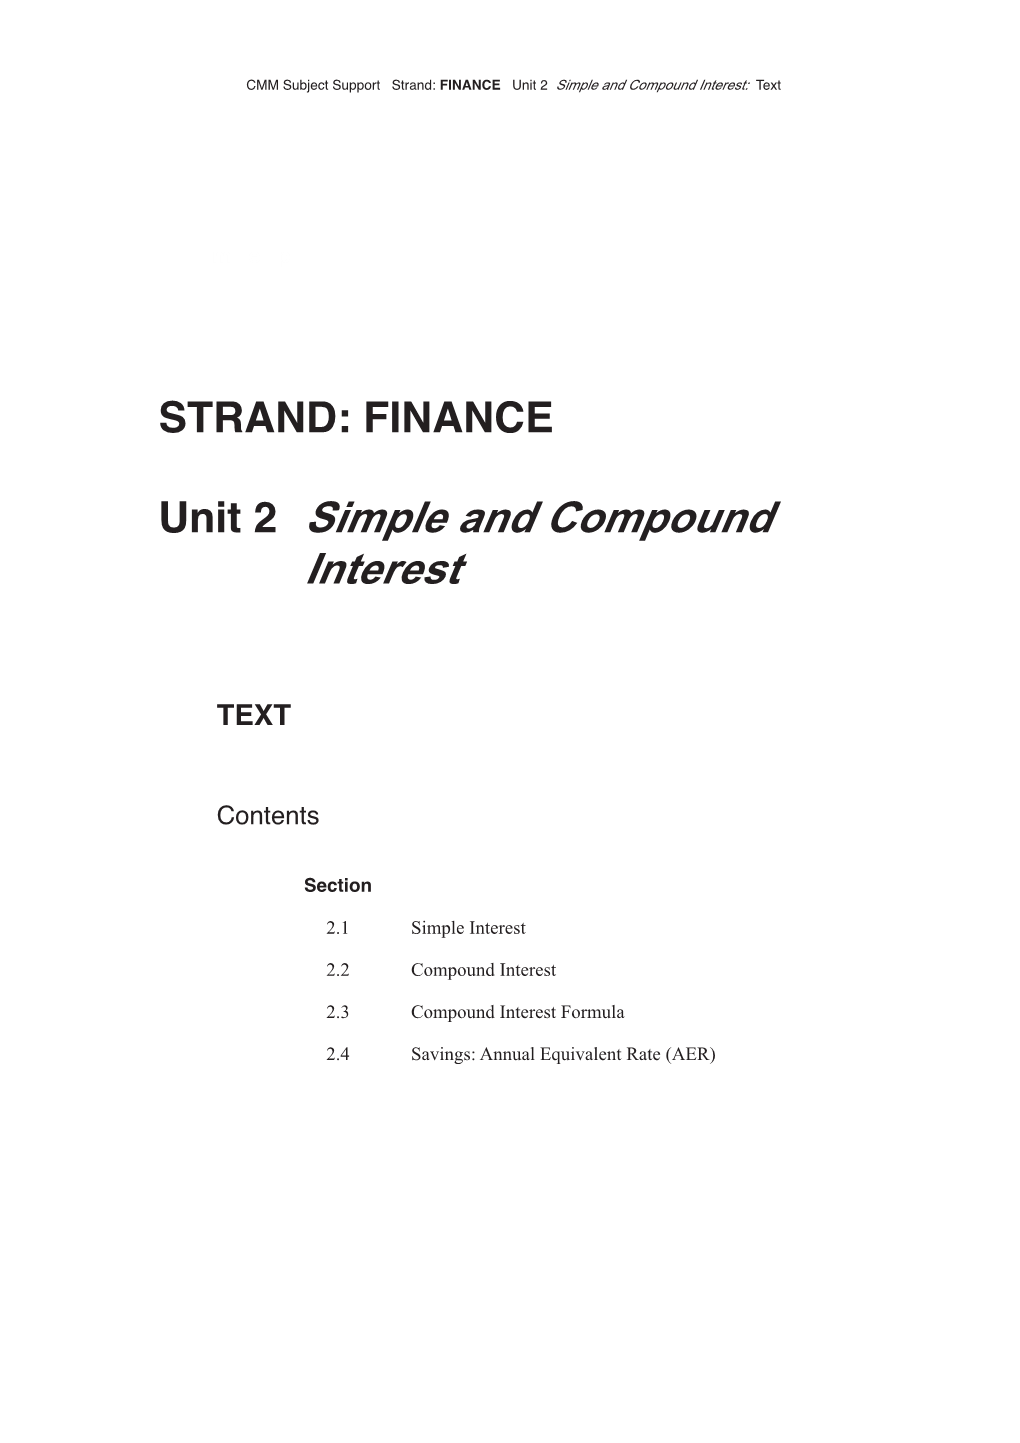 Unit 2 Simple and Compound Interest: Text